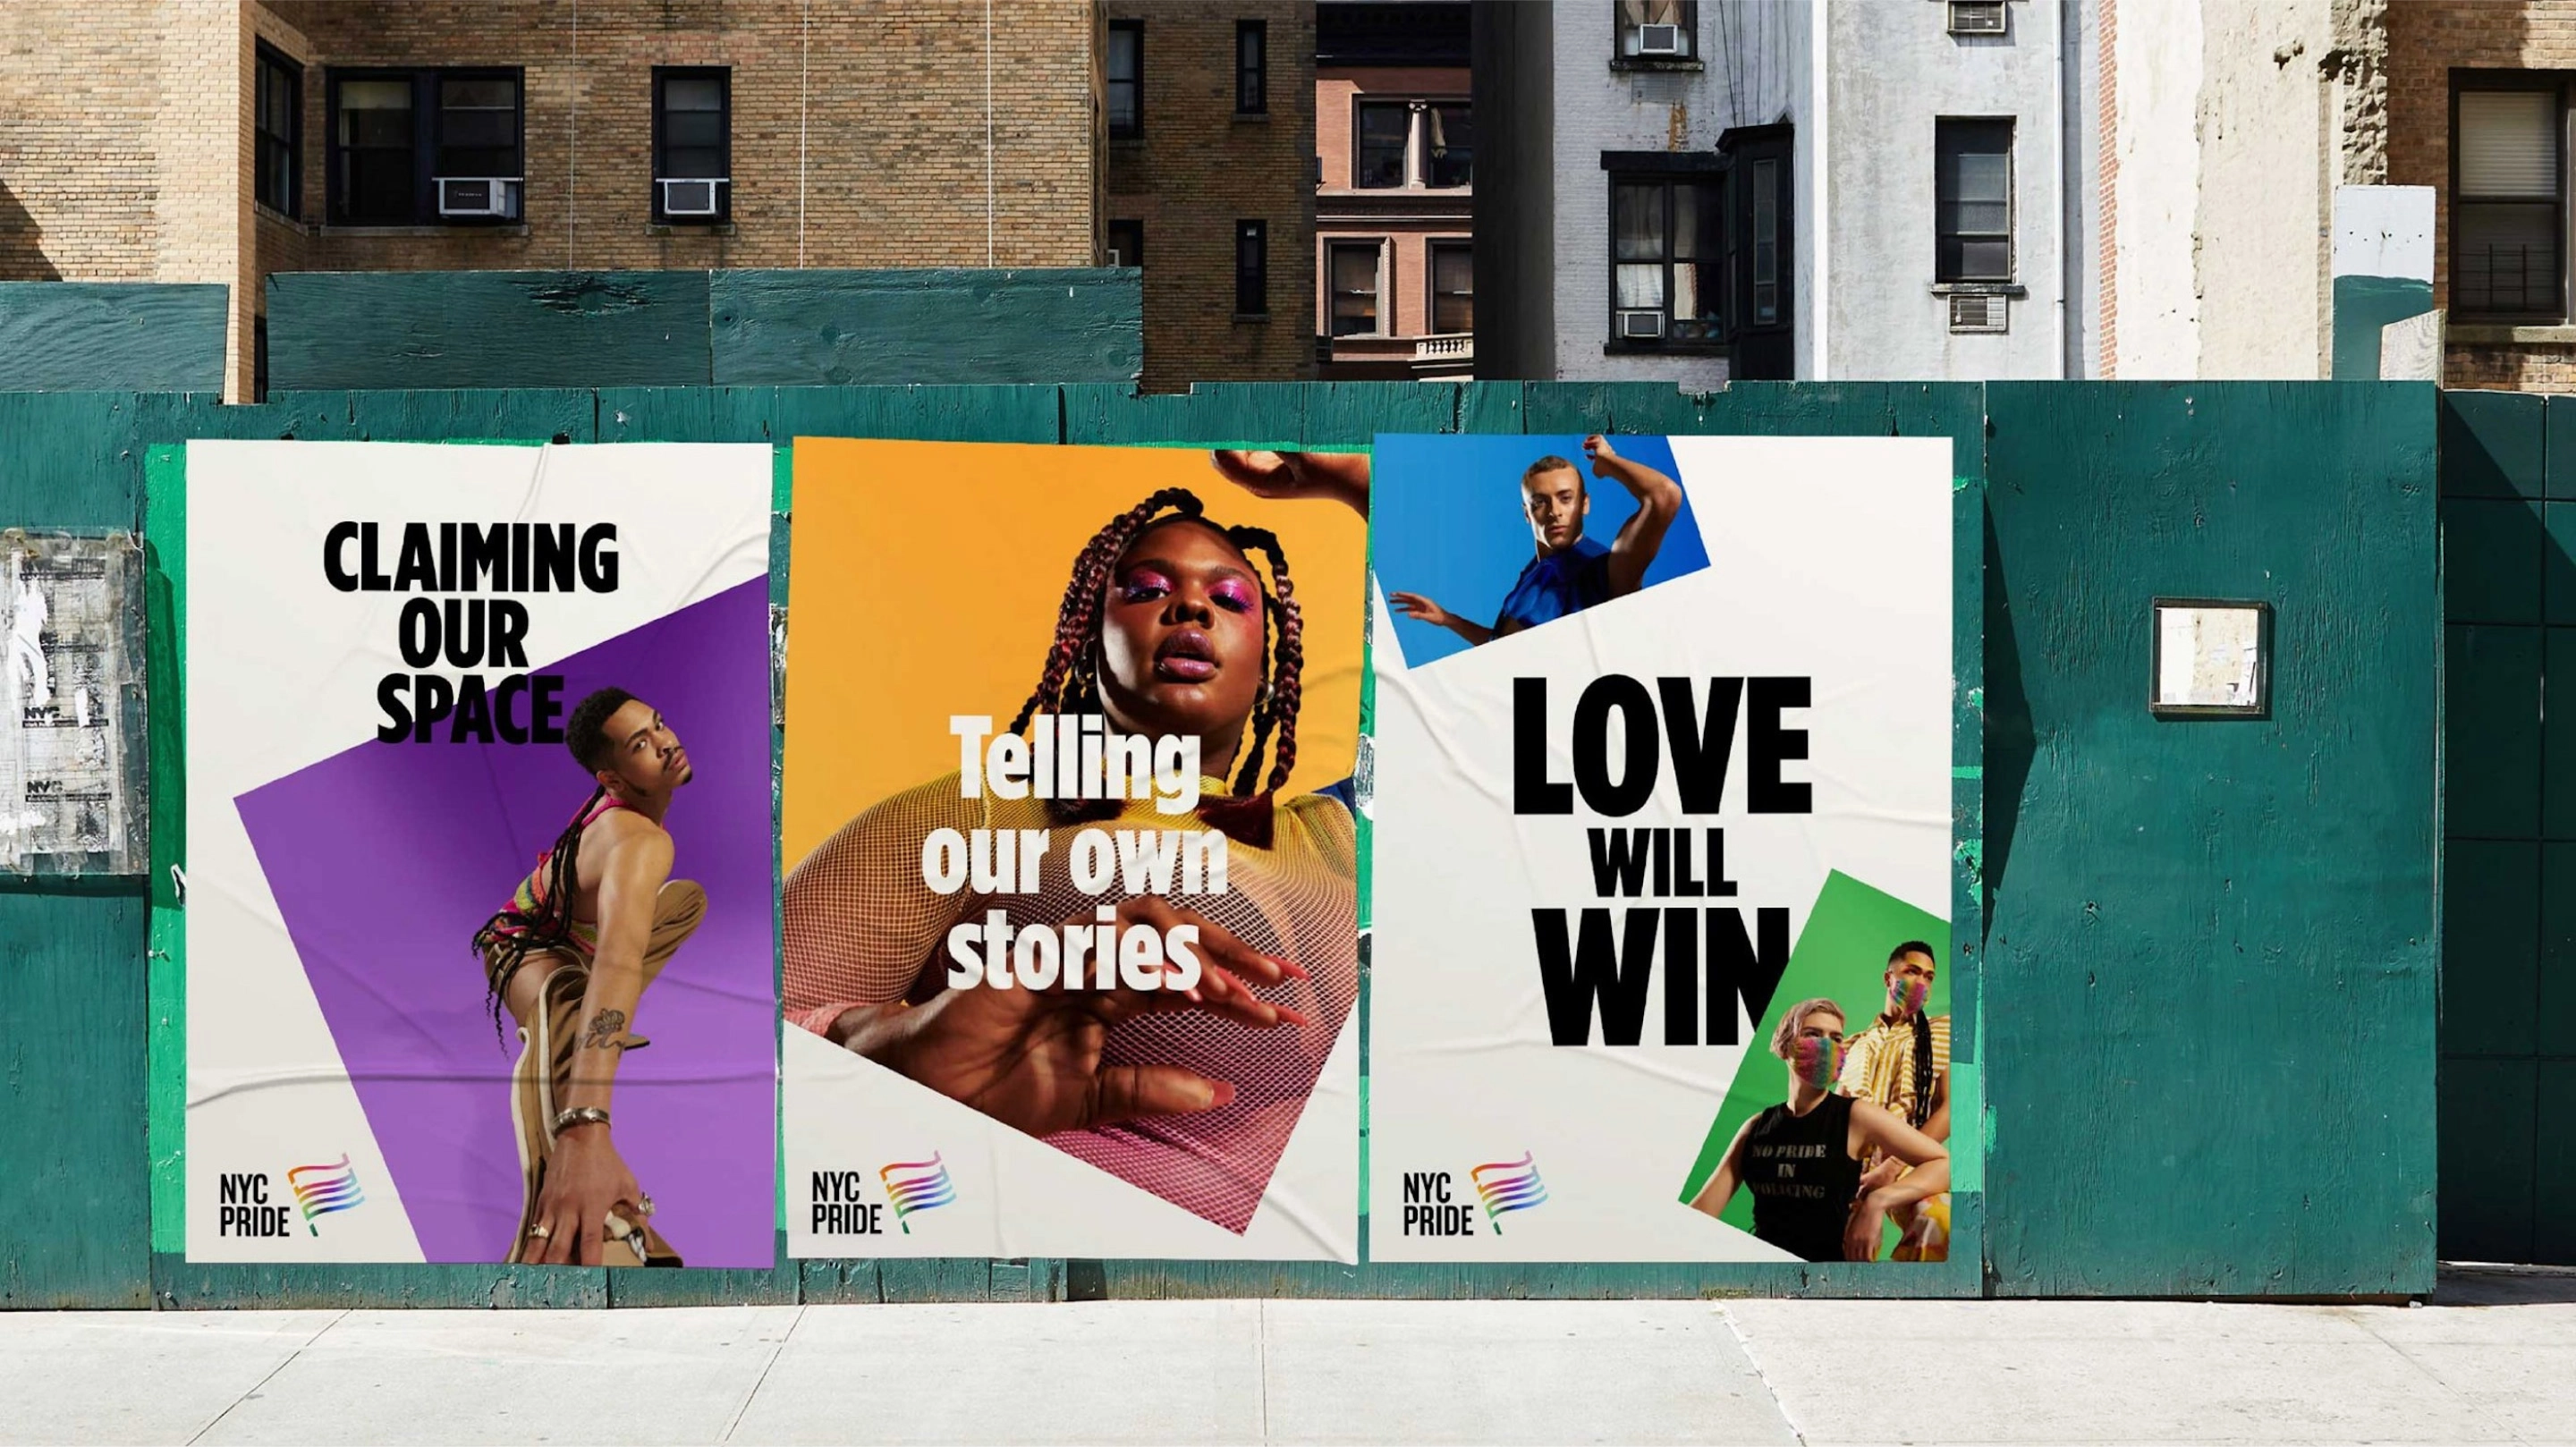 NYC Pride street billboards